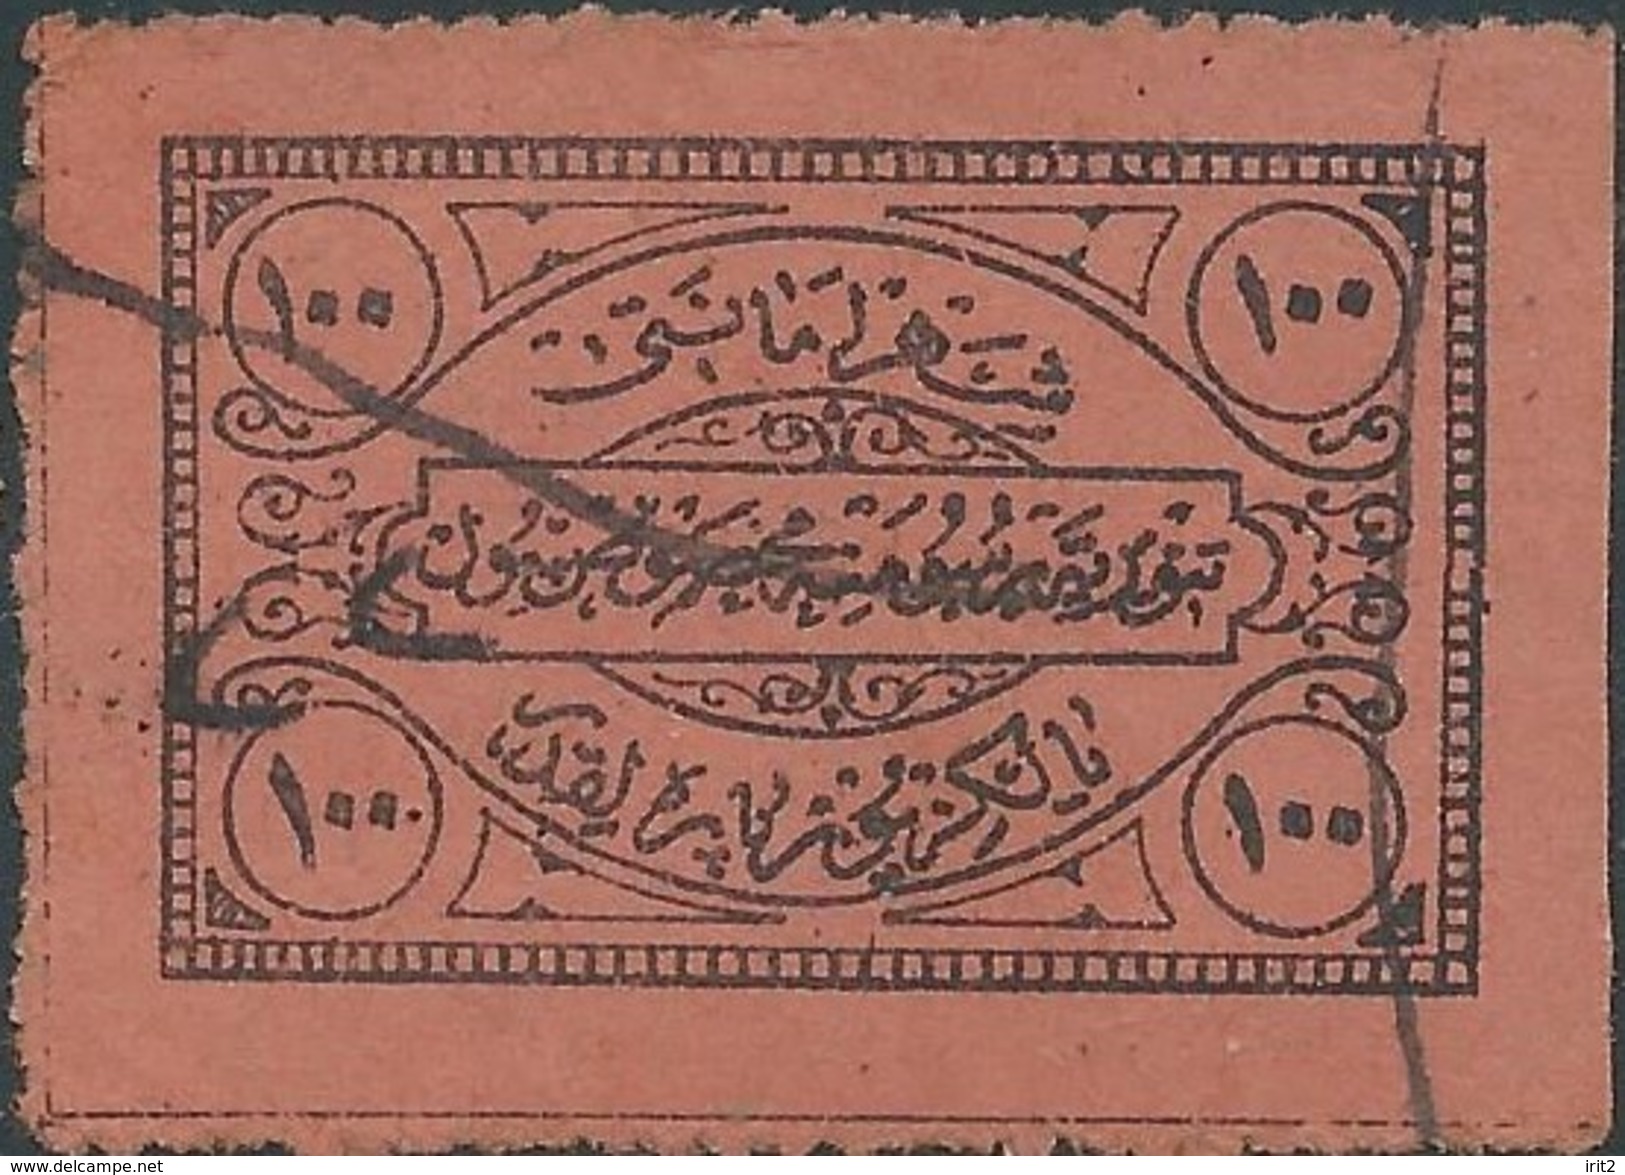 TURCHIA -TURKEY-TURKISH-Impero OTTOMAN-OTTOMANI-OSMANI 1858-1921 Fiscal Revenue Stamp Rar Used - Used Stamps